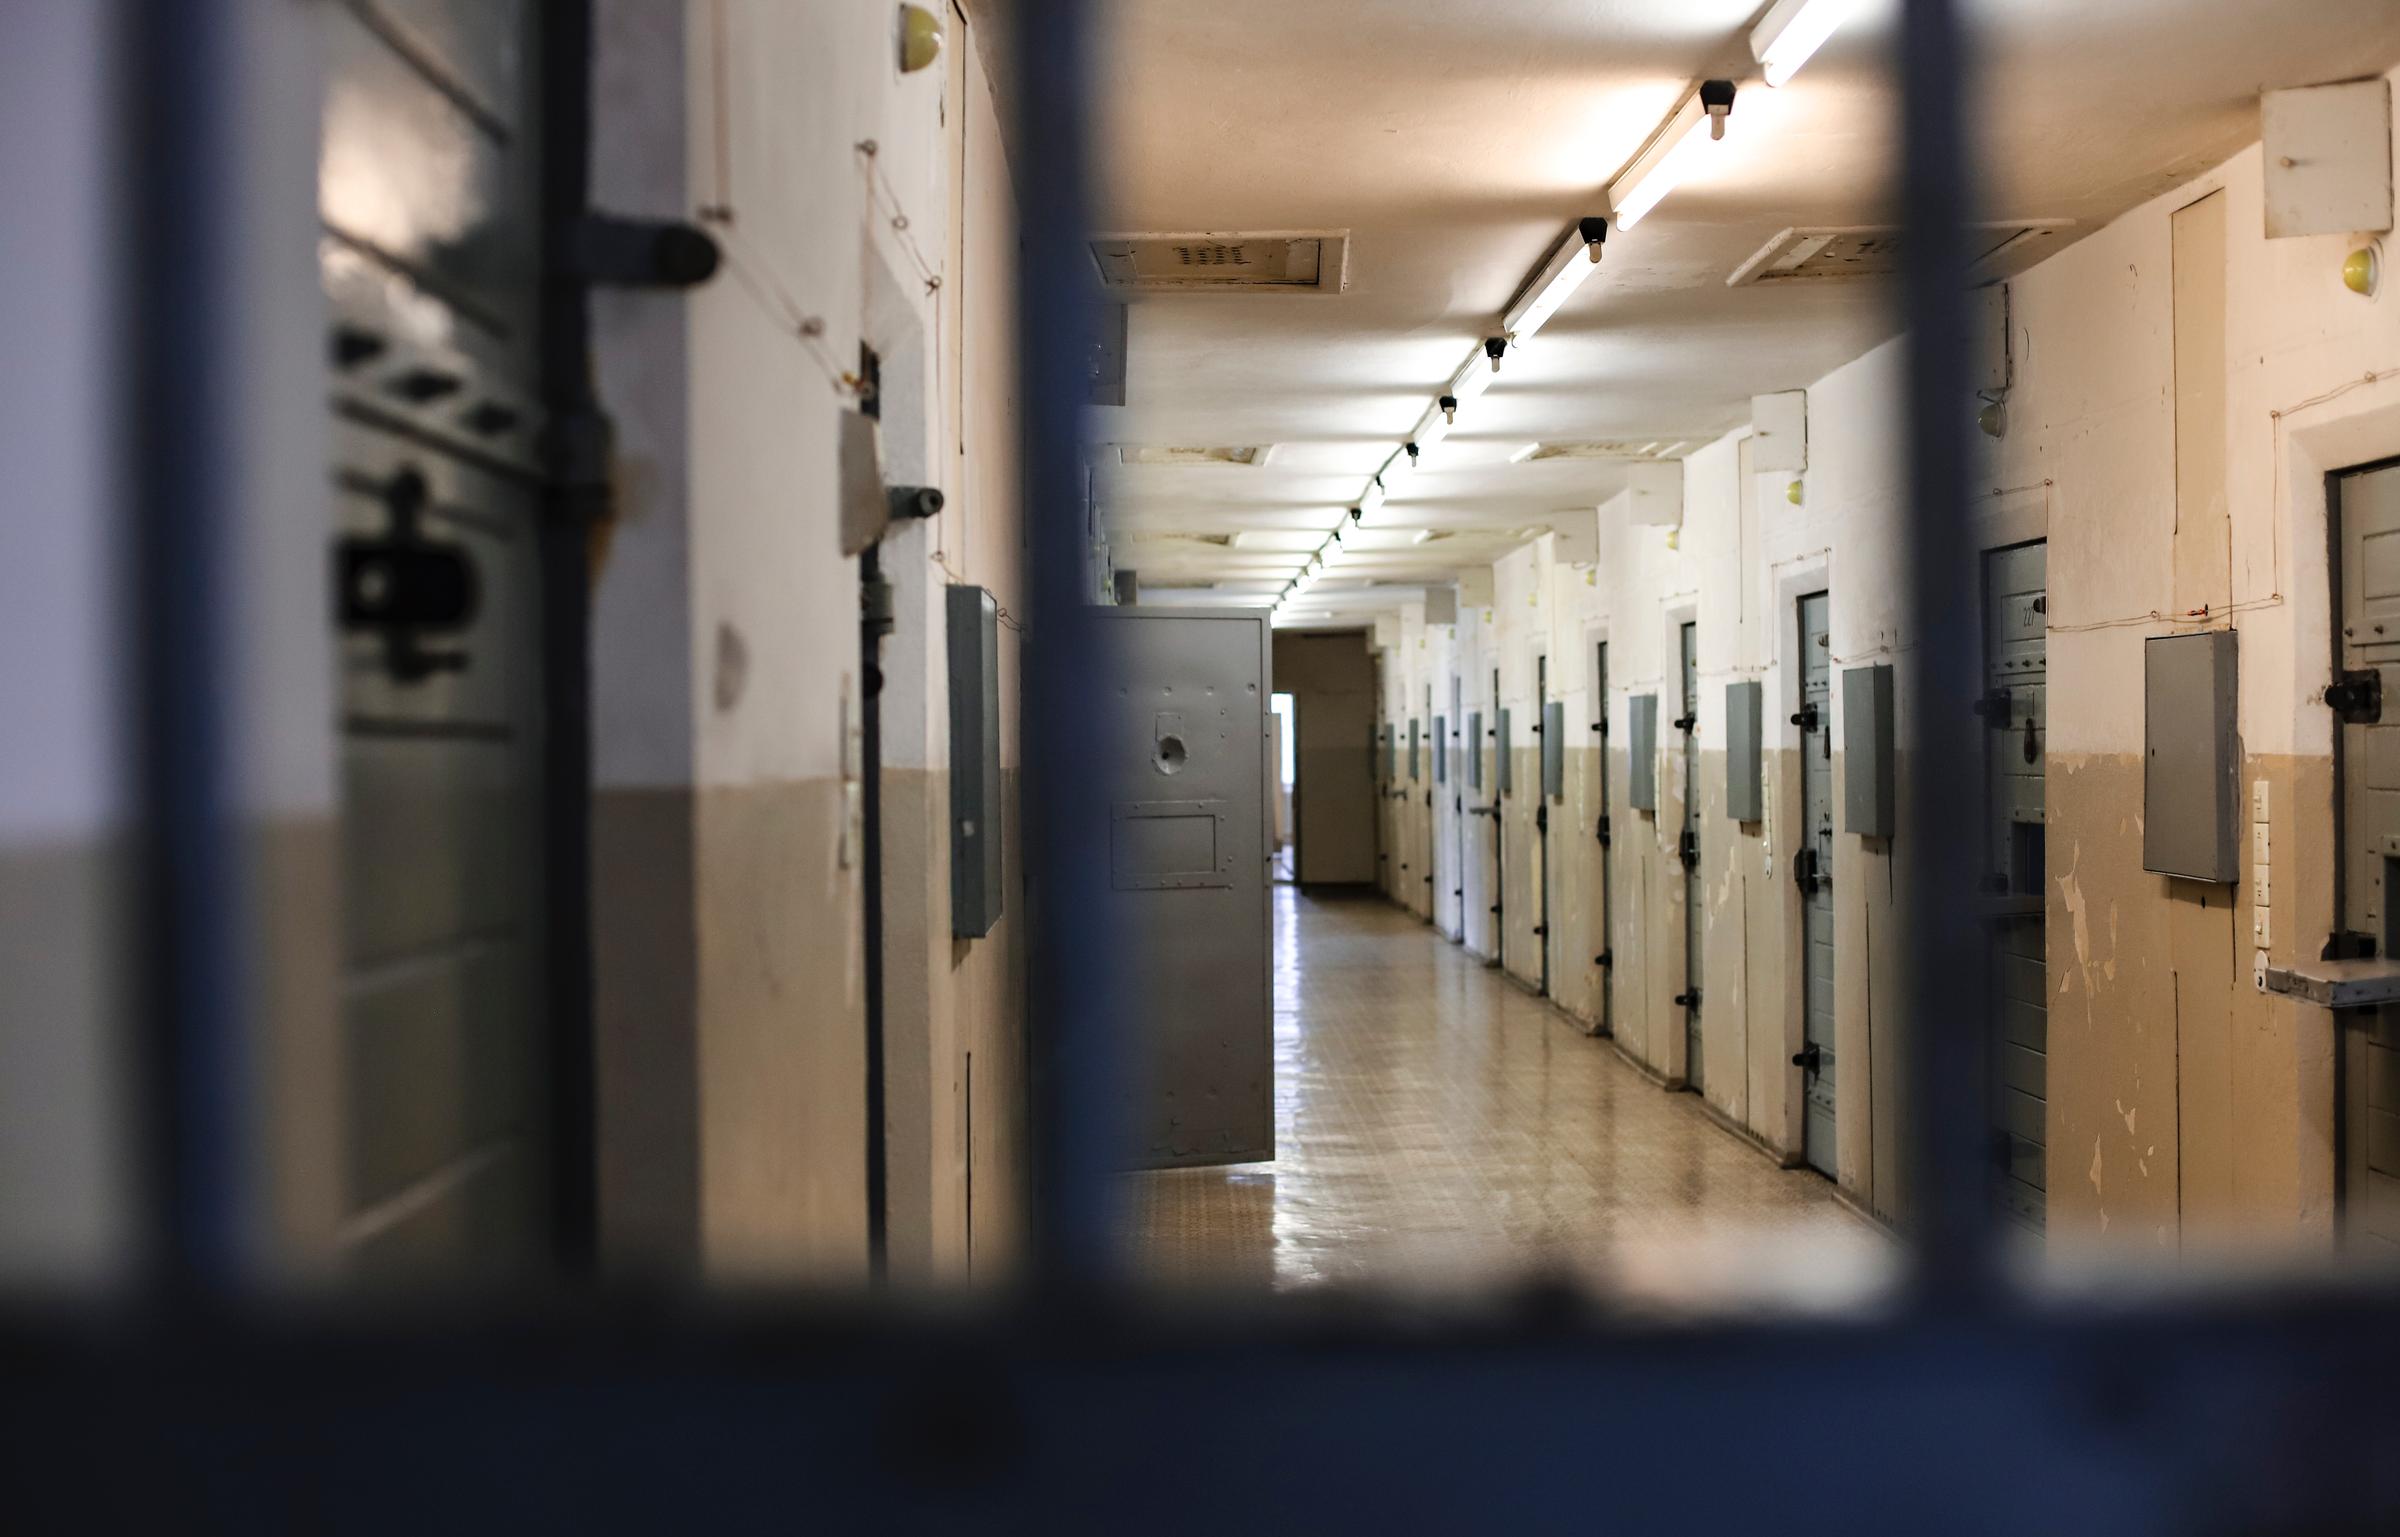 Florida’s prisons need immediate COVID-19 relief